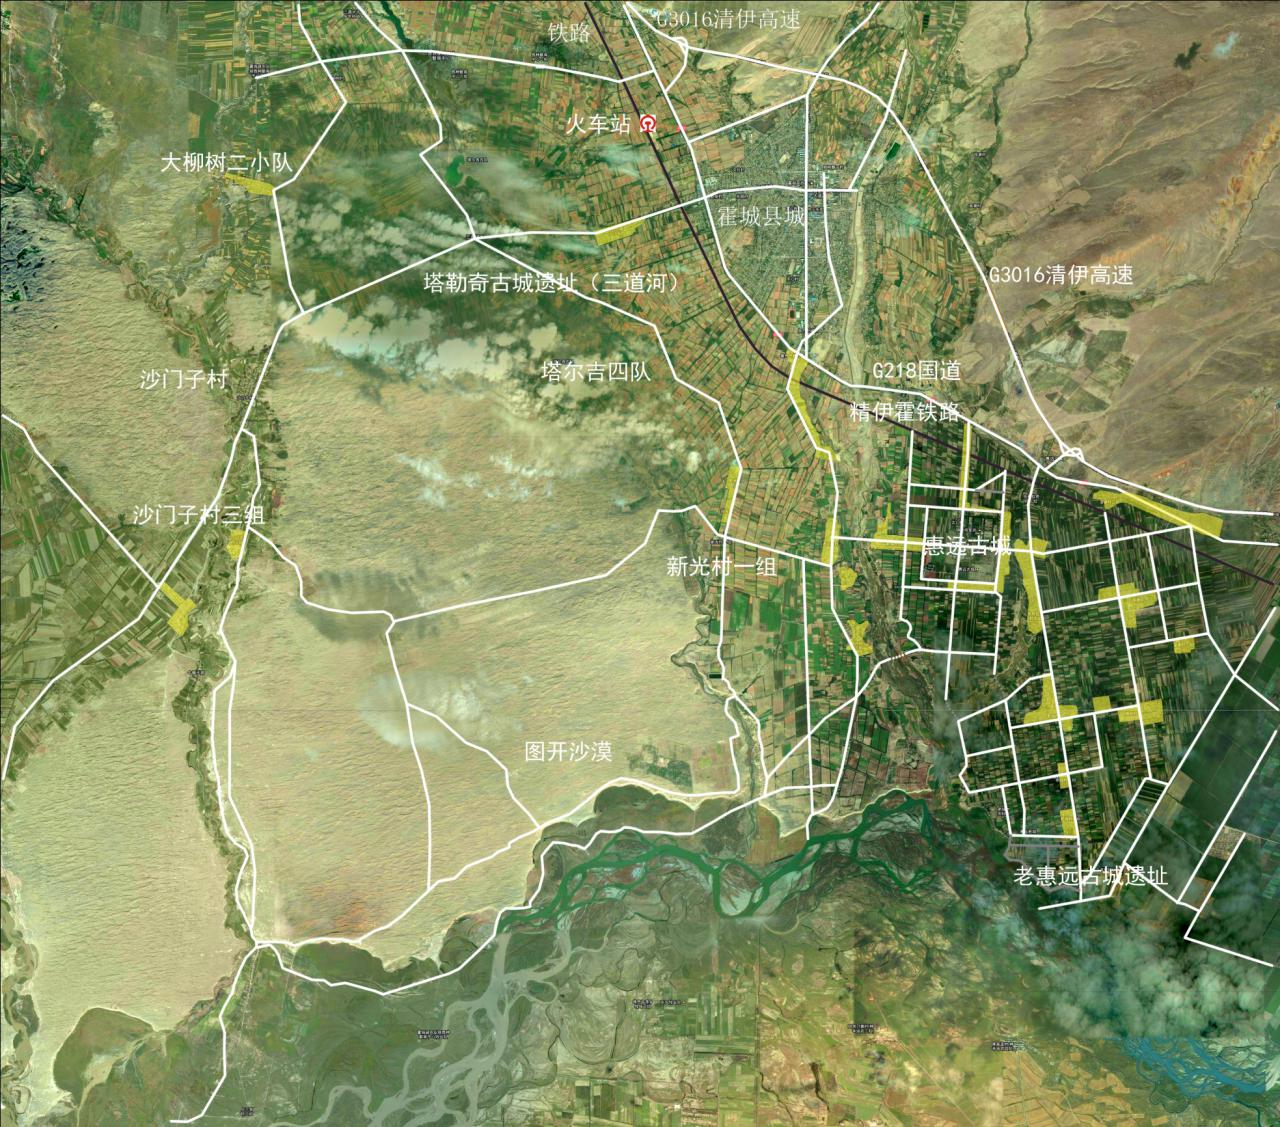 Conceptual rejuvenation planning and design of Huiyuan ancient city in Yili Xinjiang(图3)